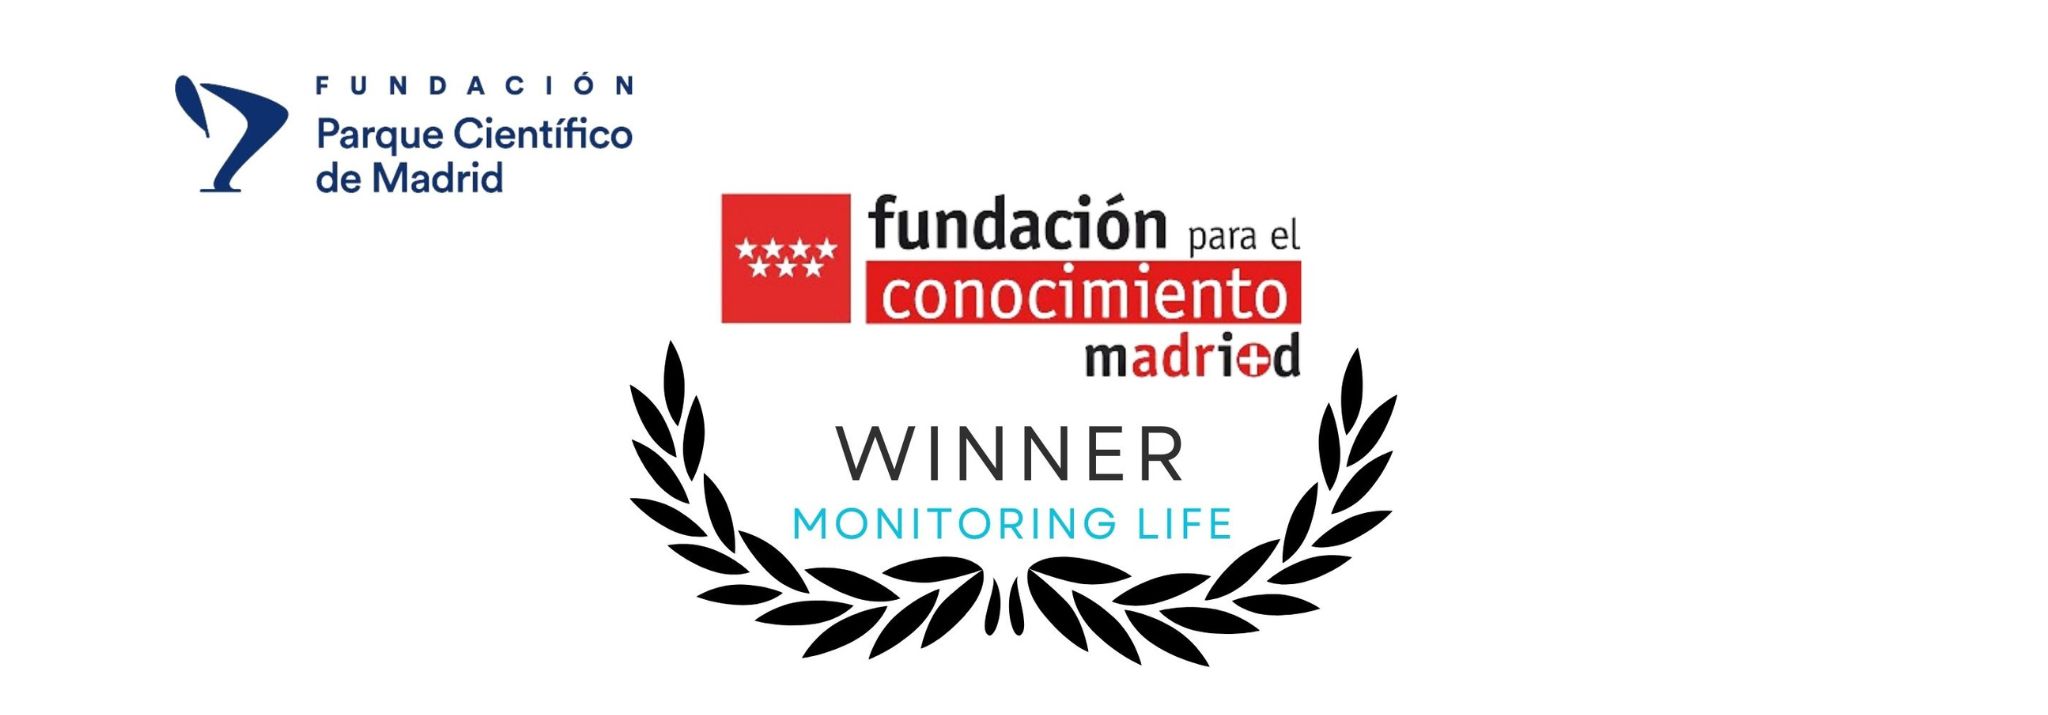 Monitoring Life has received two prestigious awards